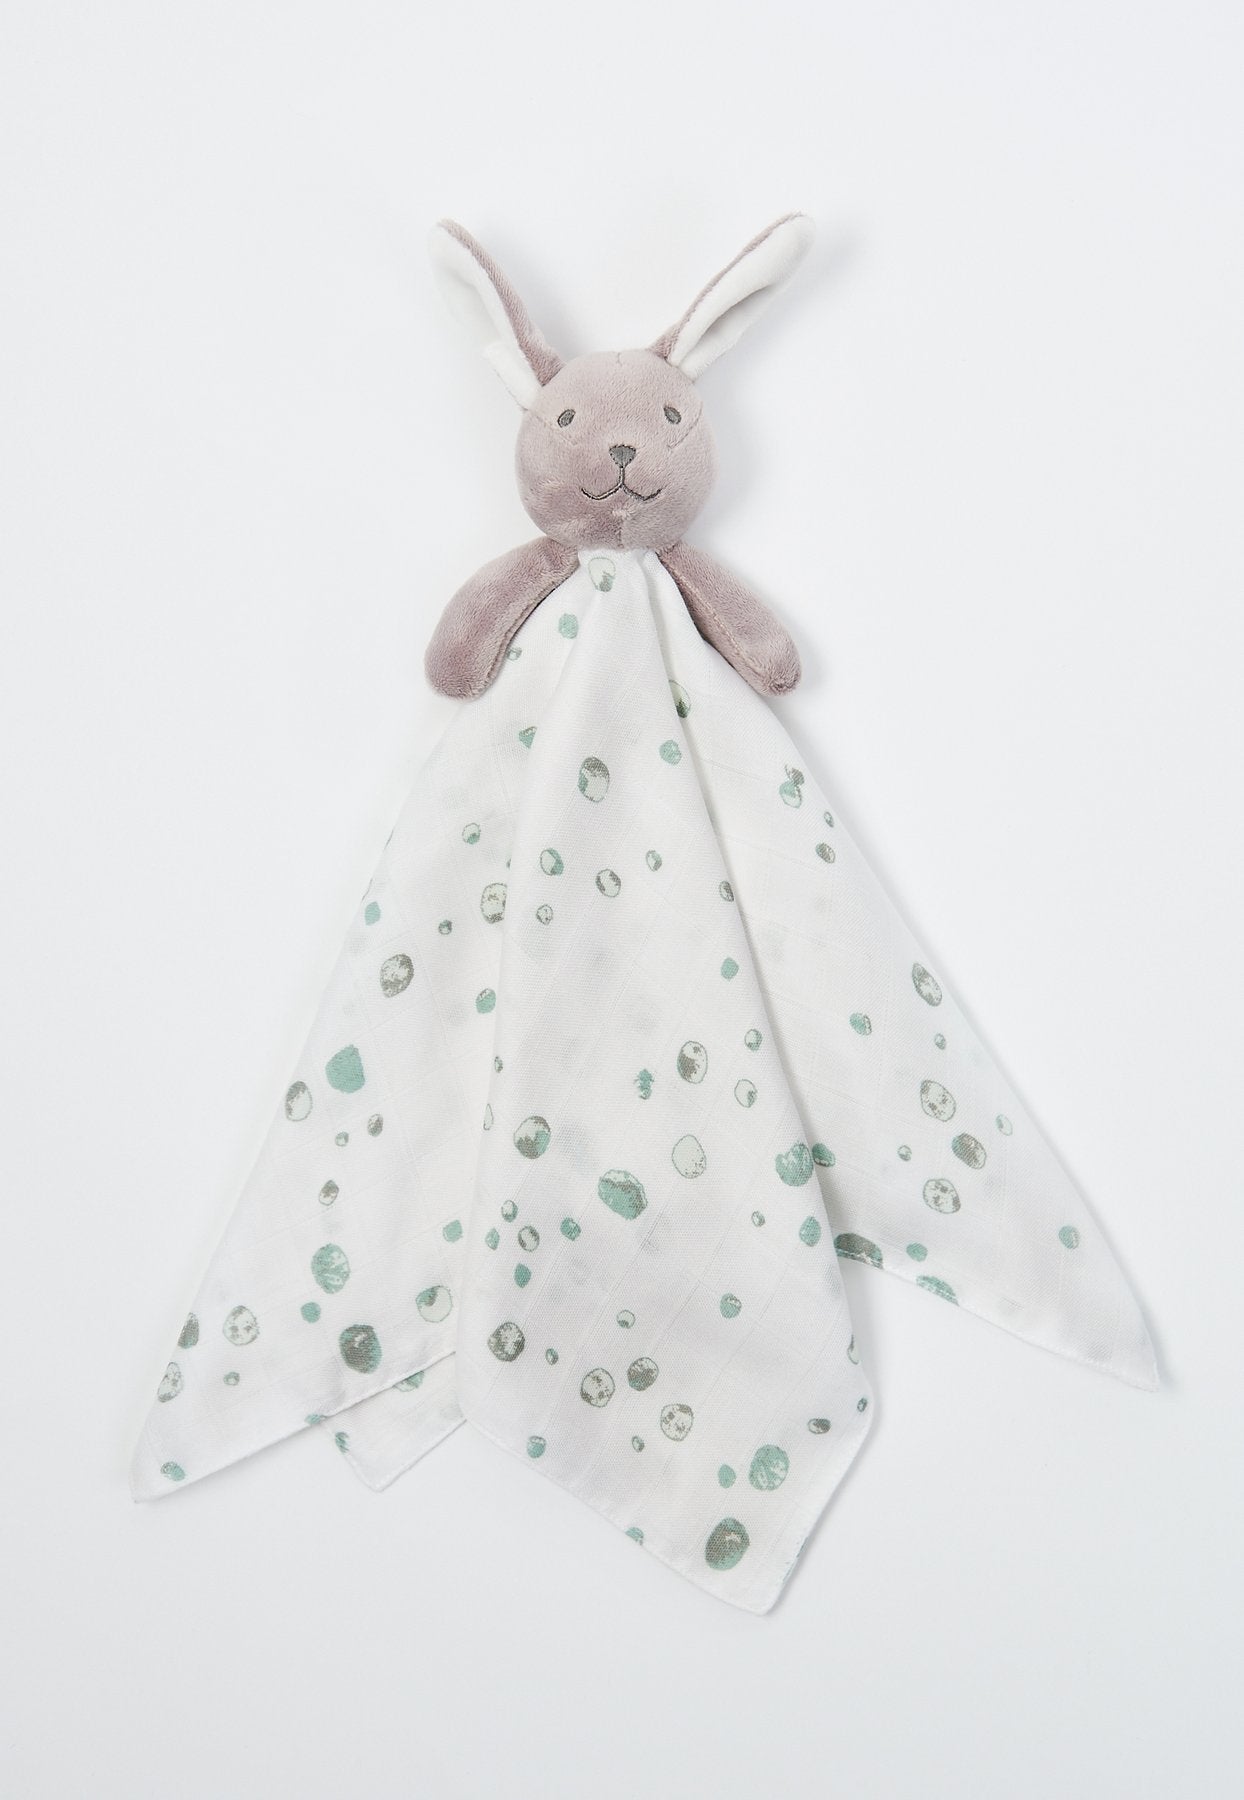 Little Bamboo Lovie/Comforter - Blair the Bunny